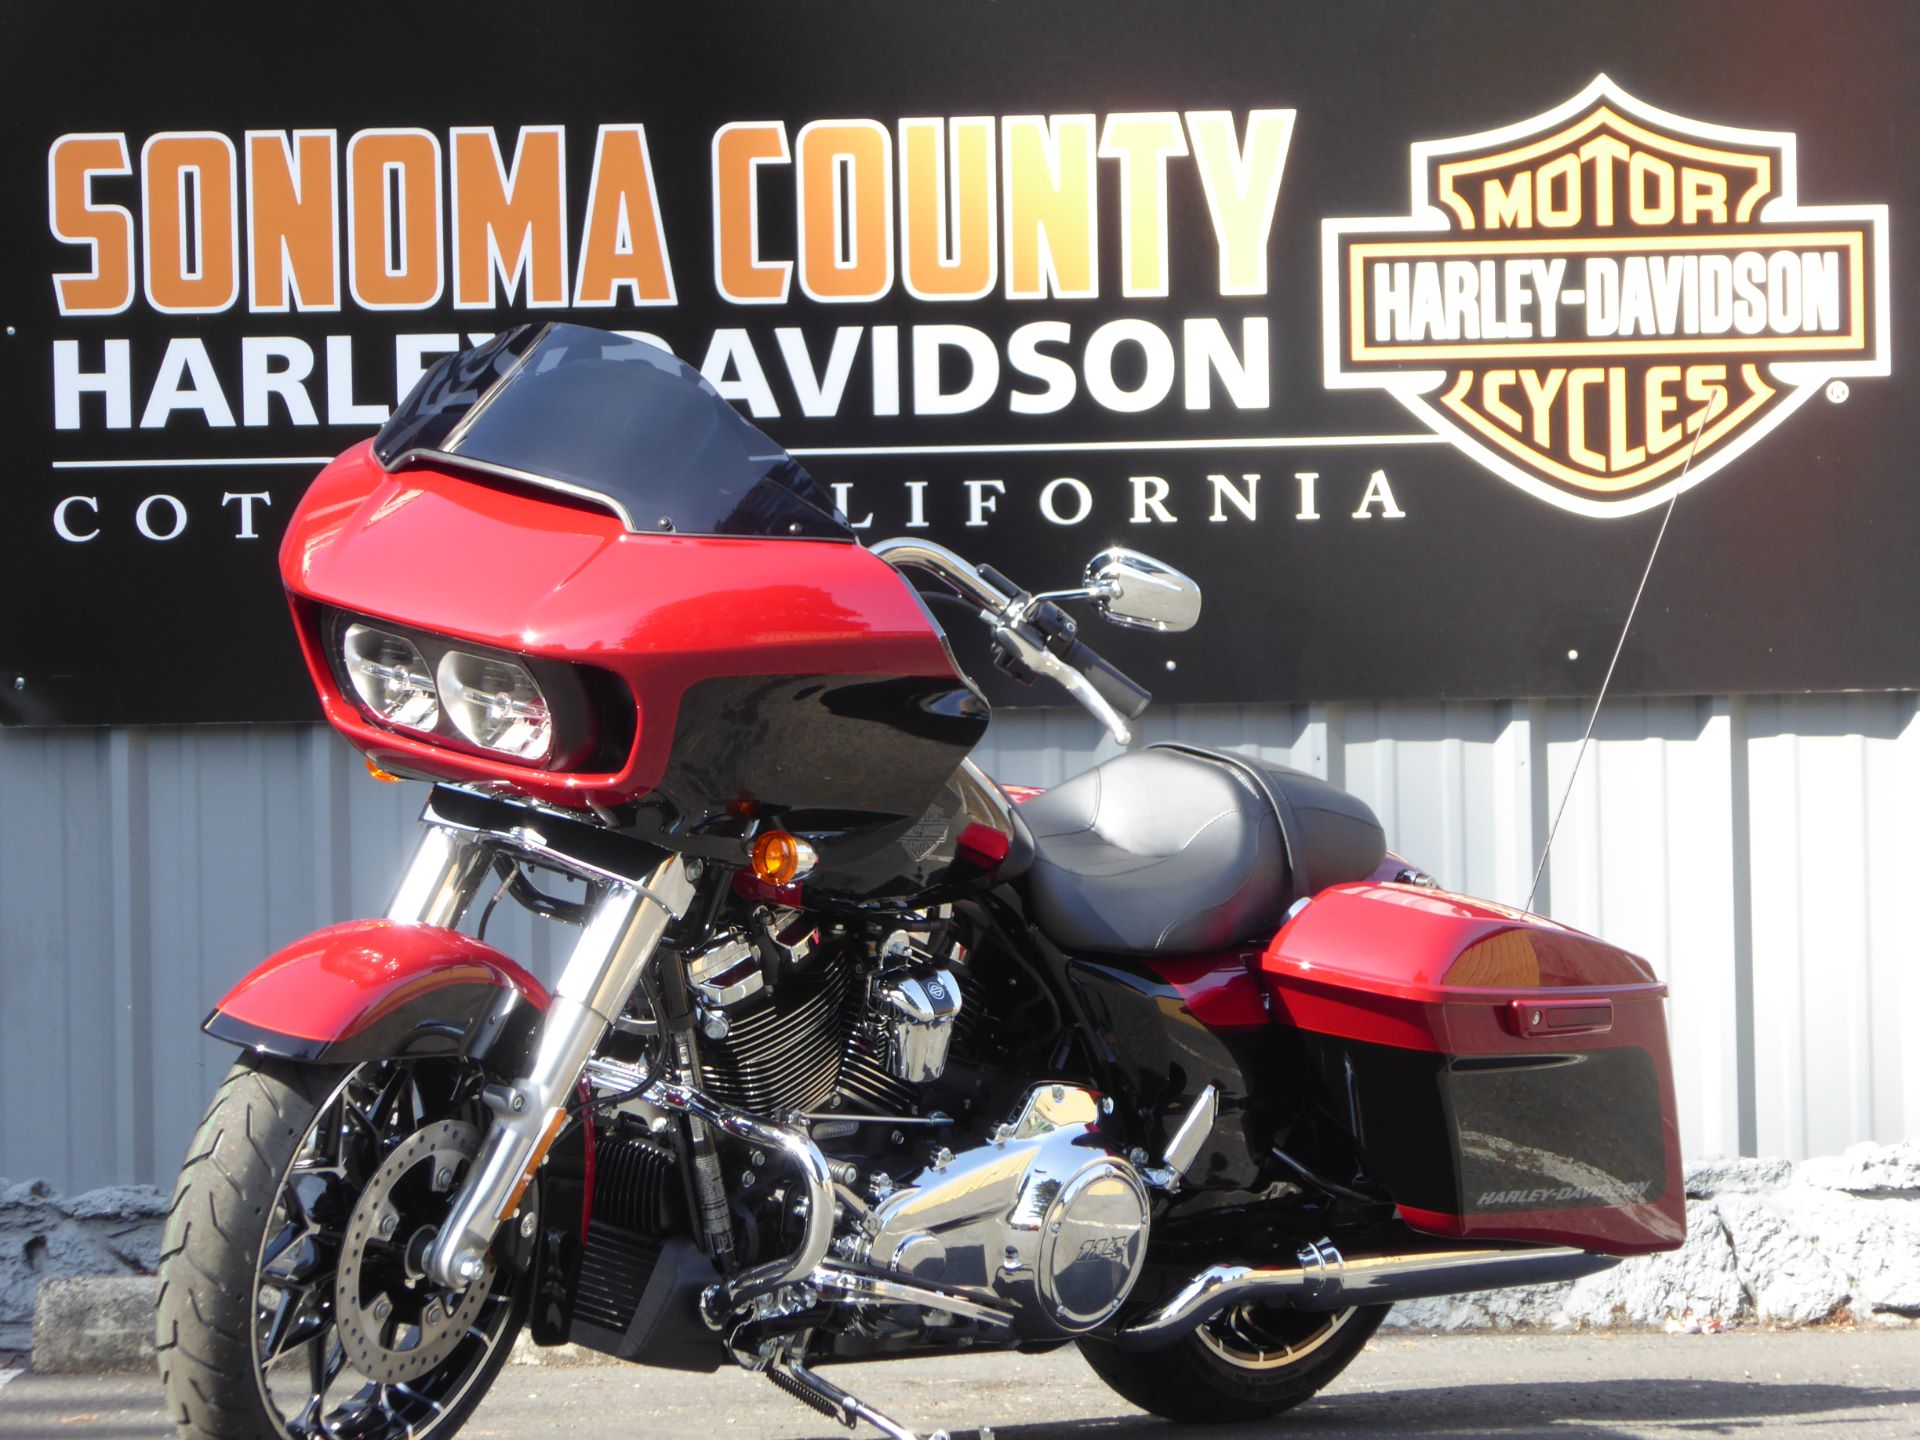 2021 Harley-Davidson Road Glide® Special in Cotati, California - Photo 3